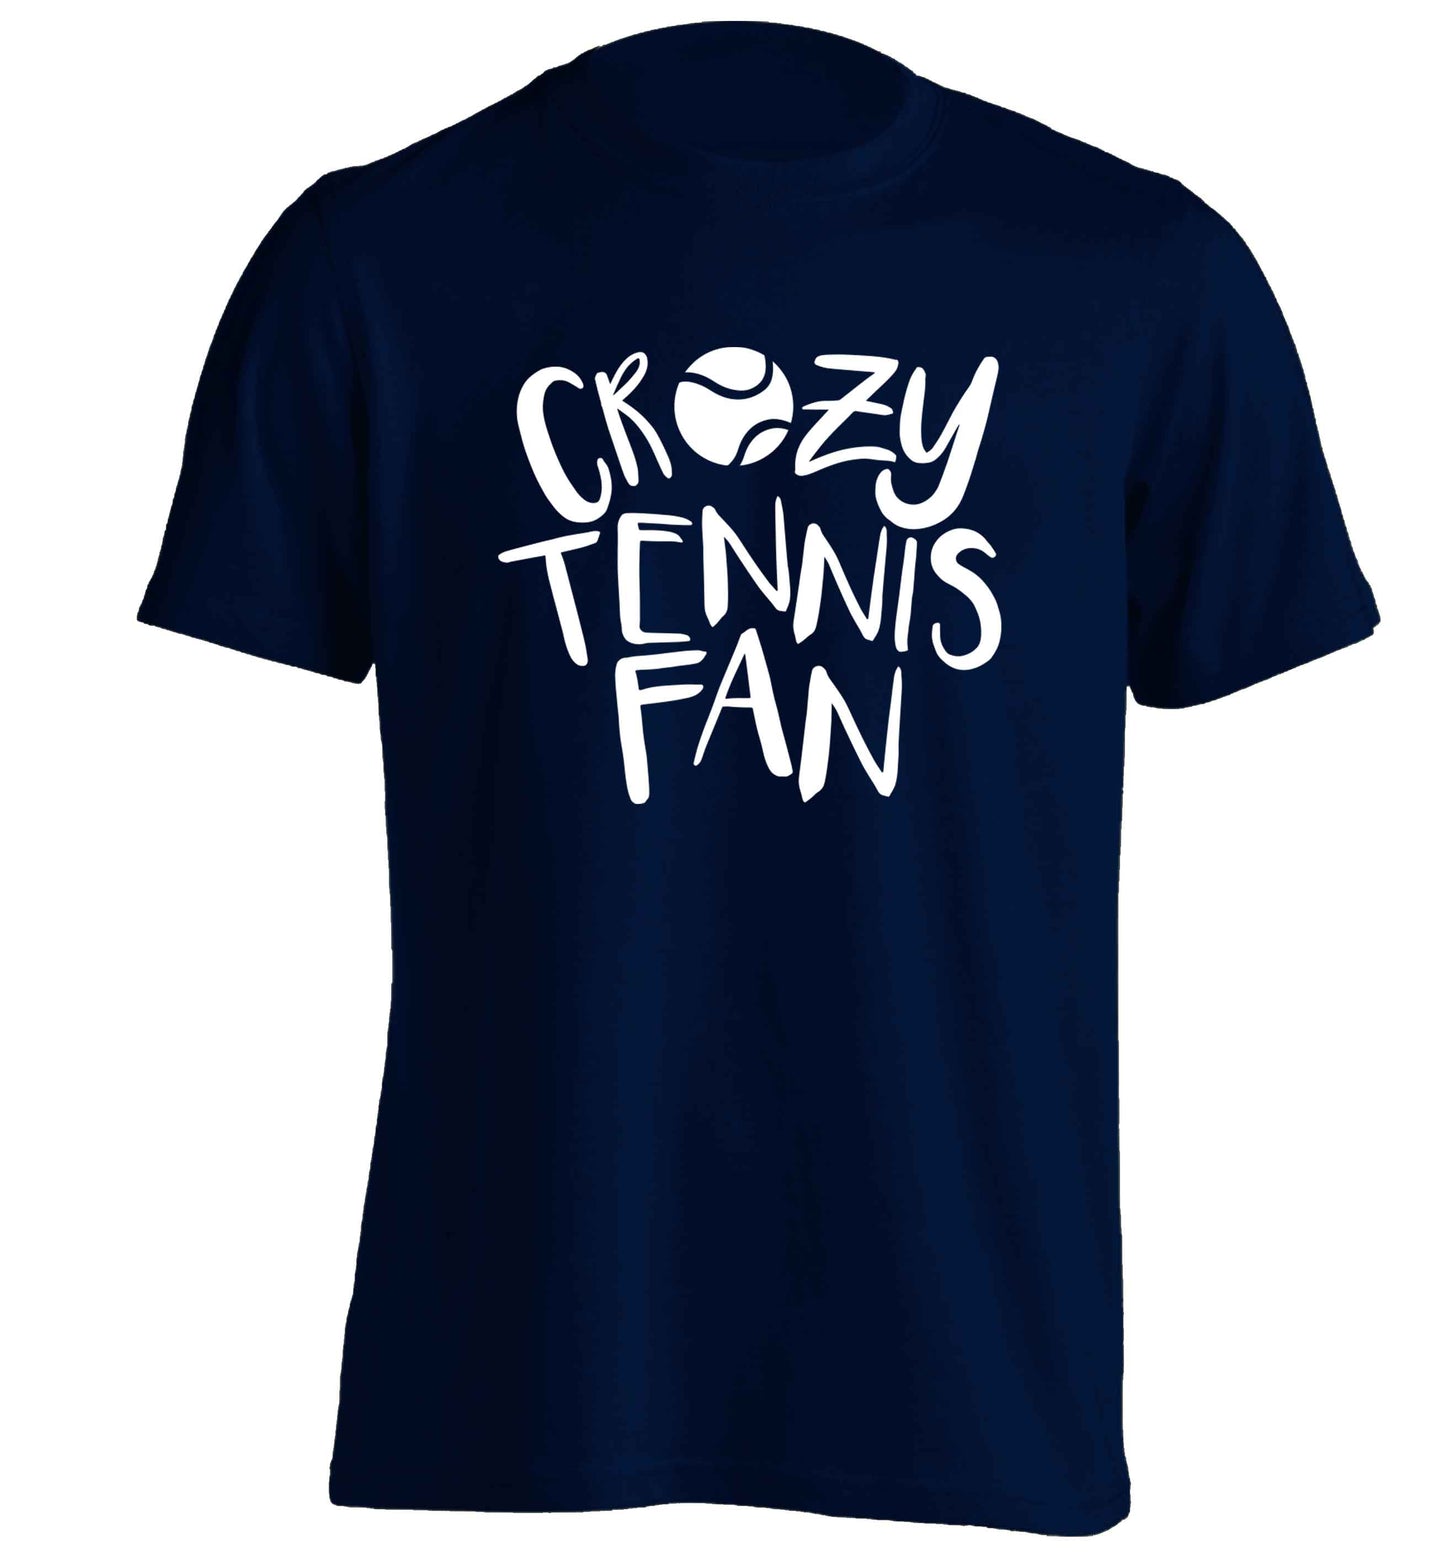 Crazy tennis fan adults unisex navy Tshirt 2XL